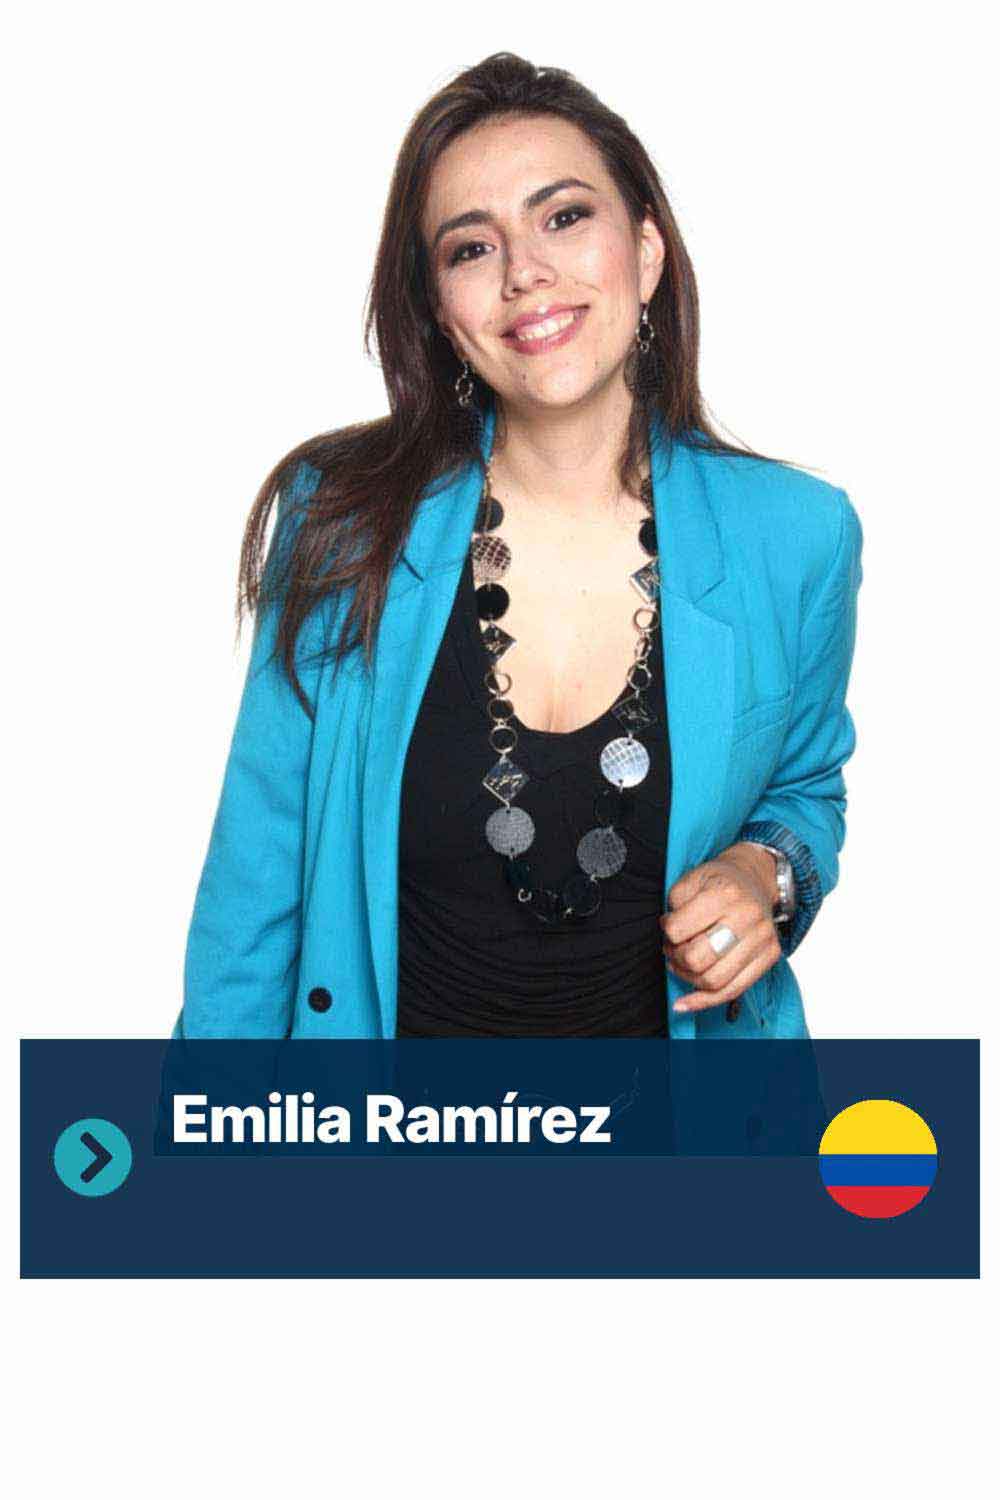 Emilia Ramirez